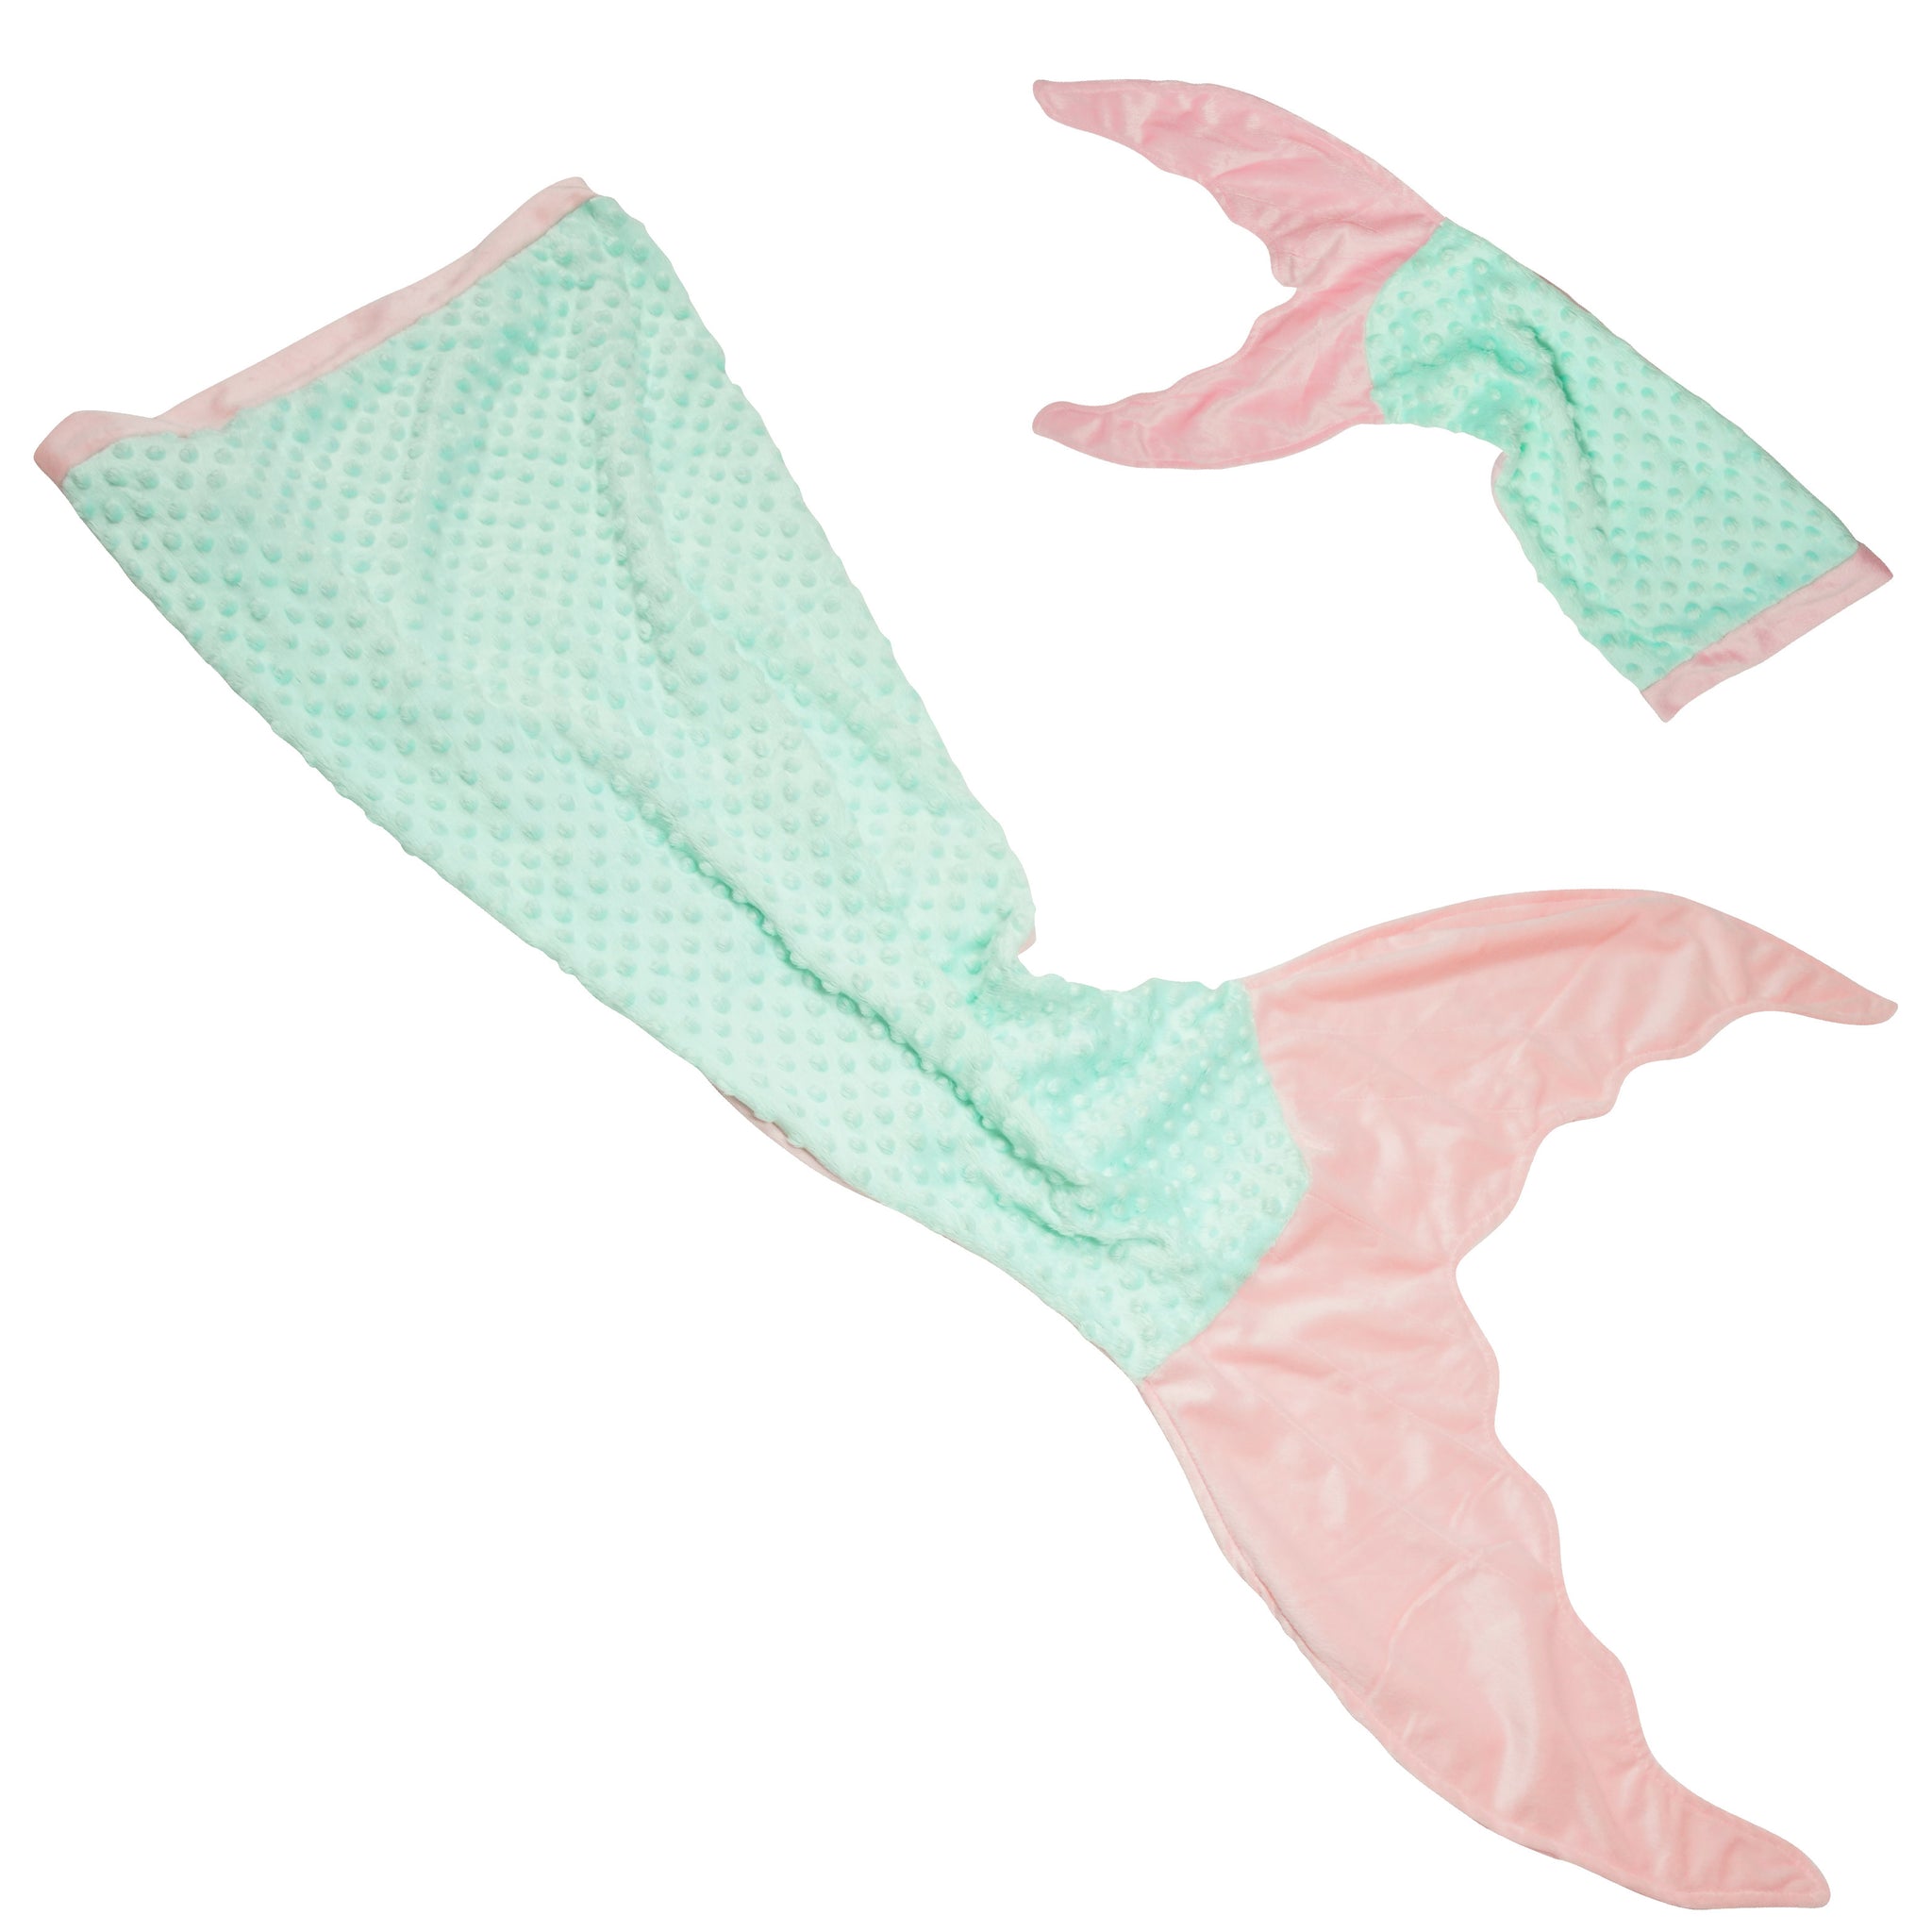 Mermaid Tail Blanket for Girls - Aqua (With Bonus Doll Blanket Included)